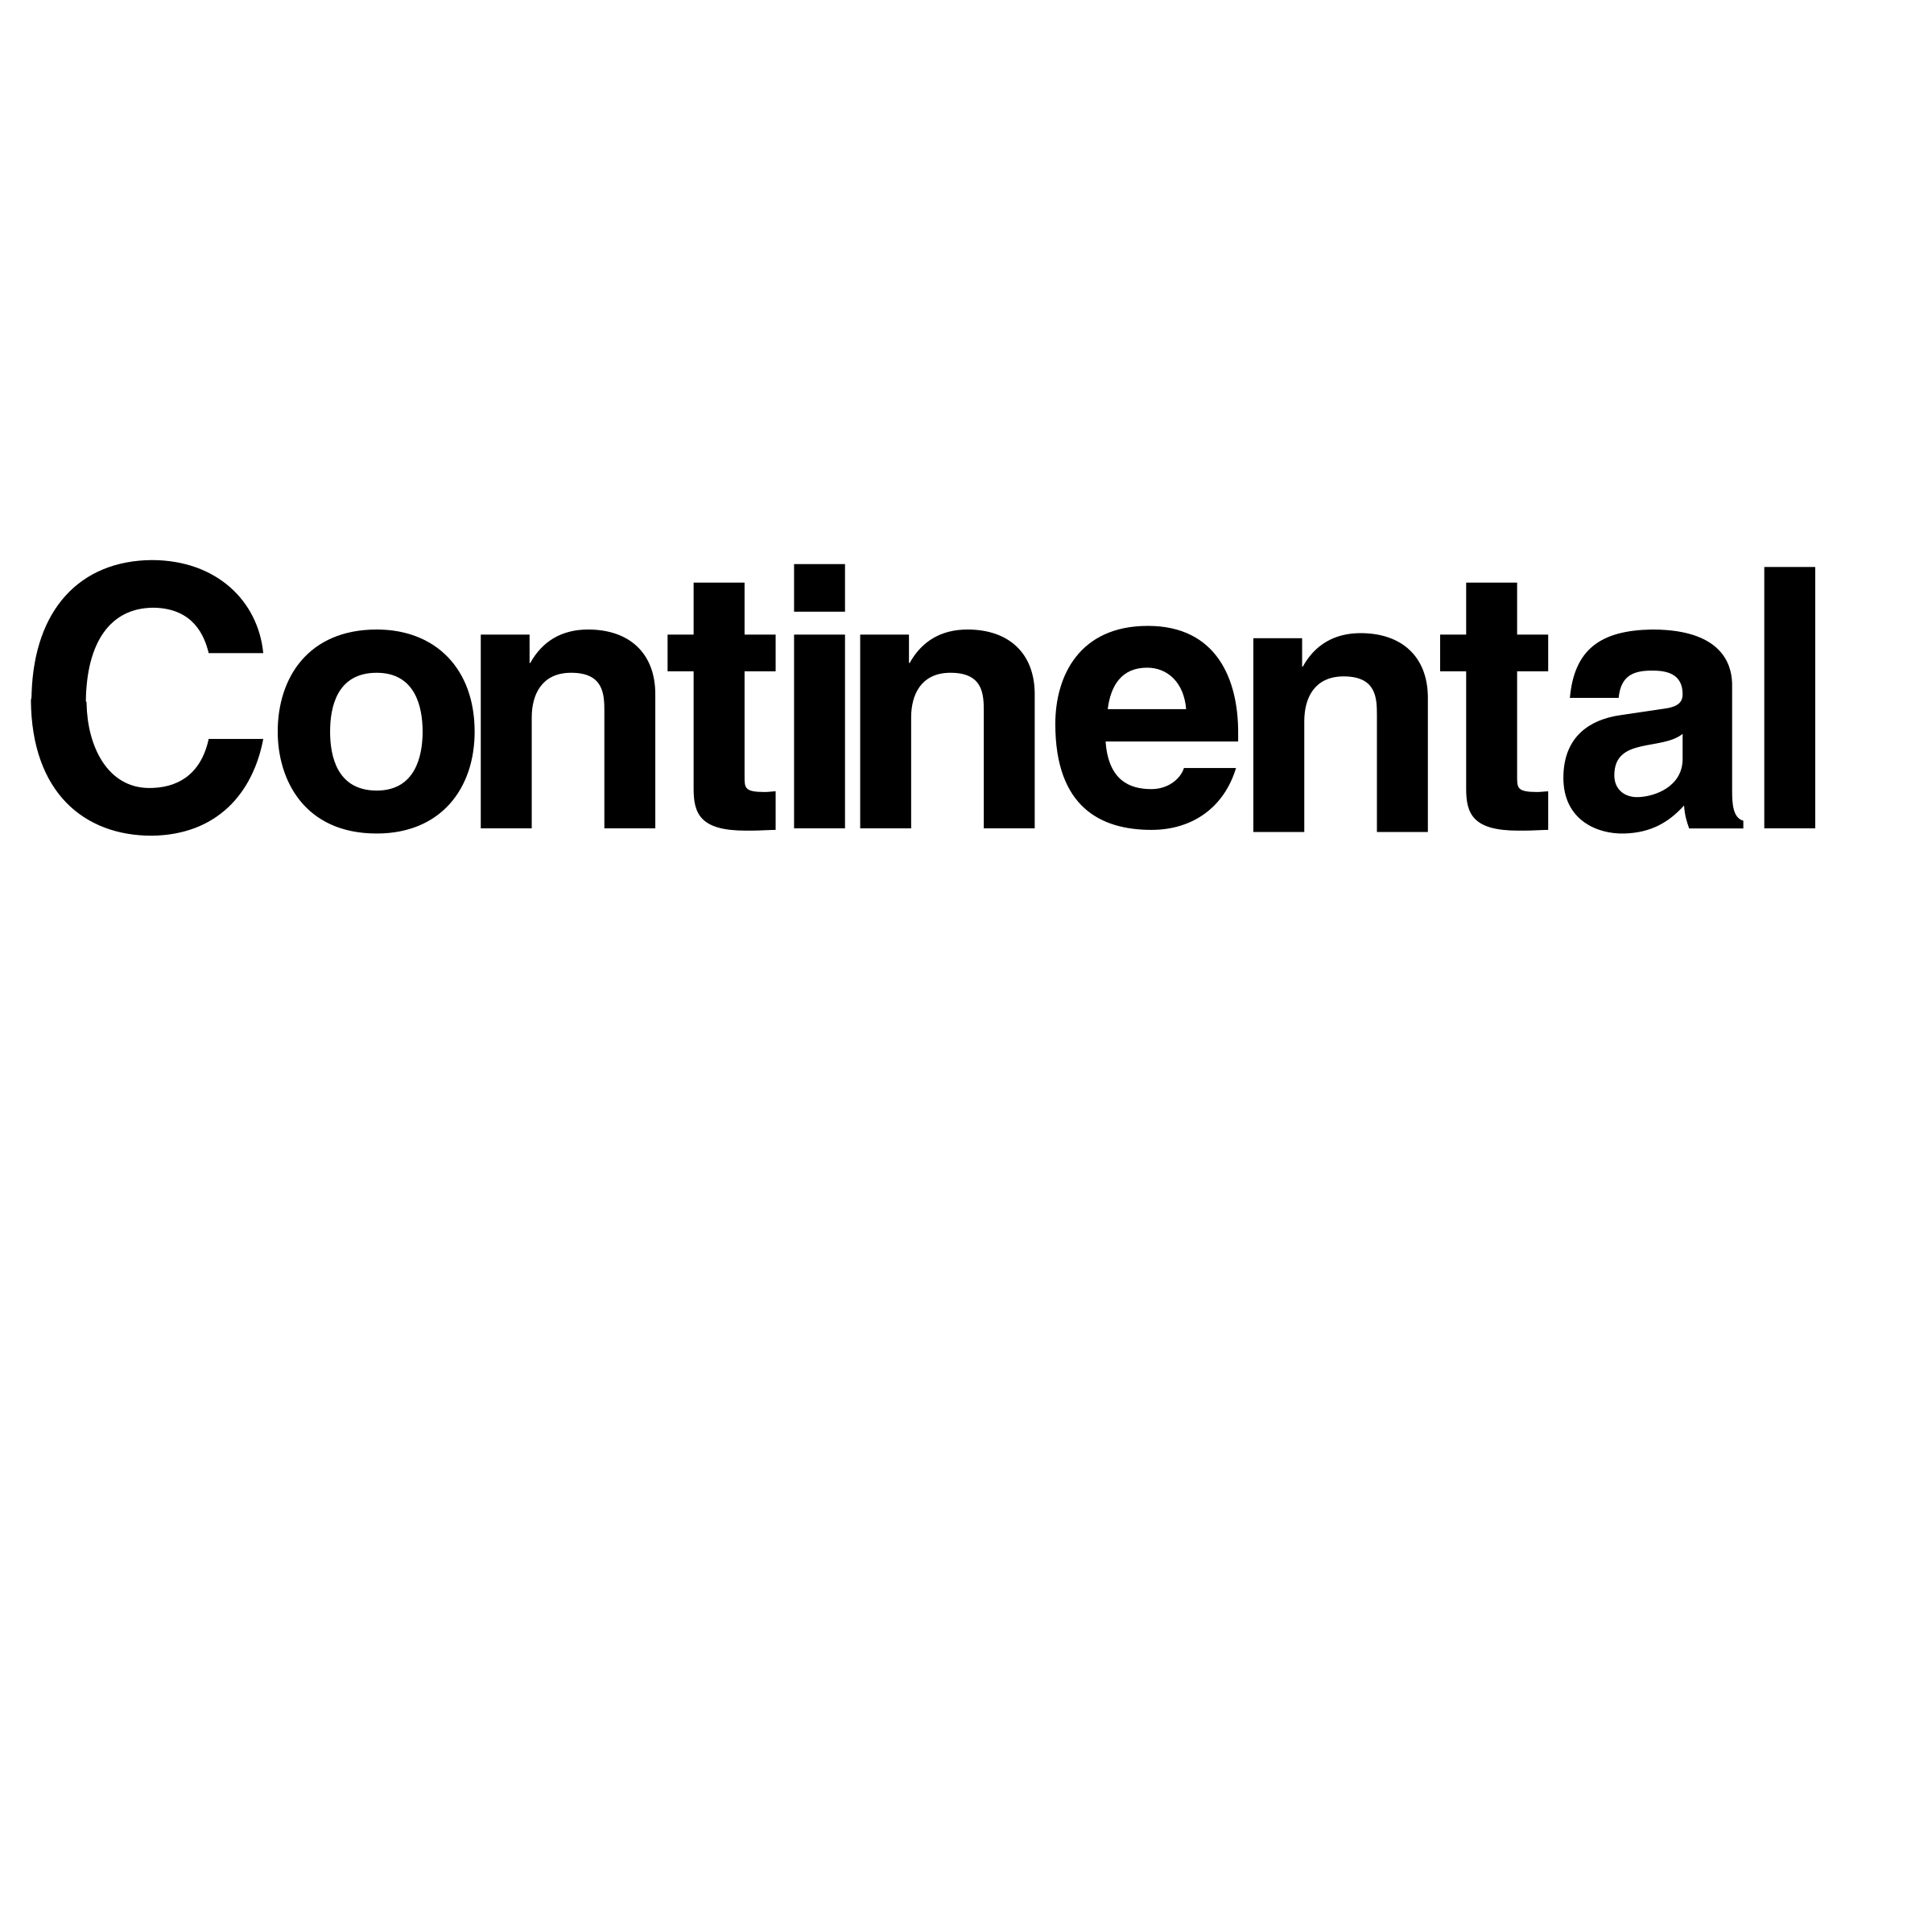 Continental Black Logo - Continental Lasers Logo PNG Transparent & SVG Vector